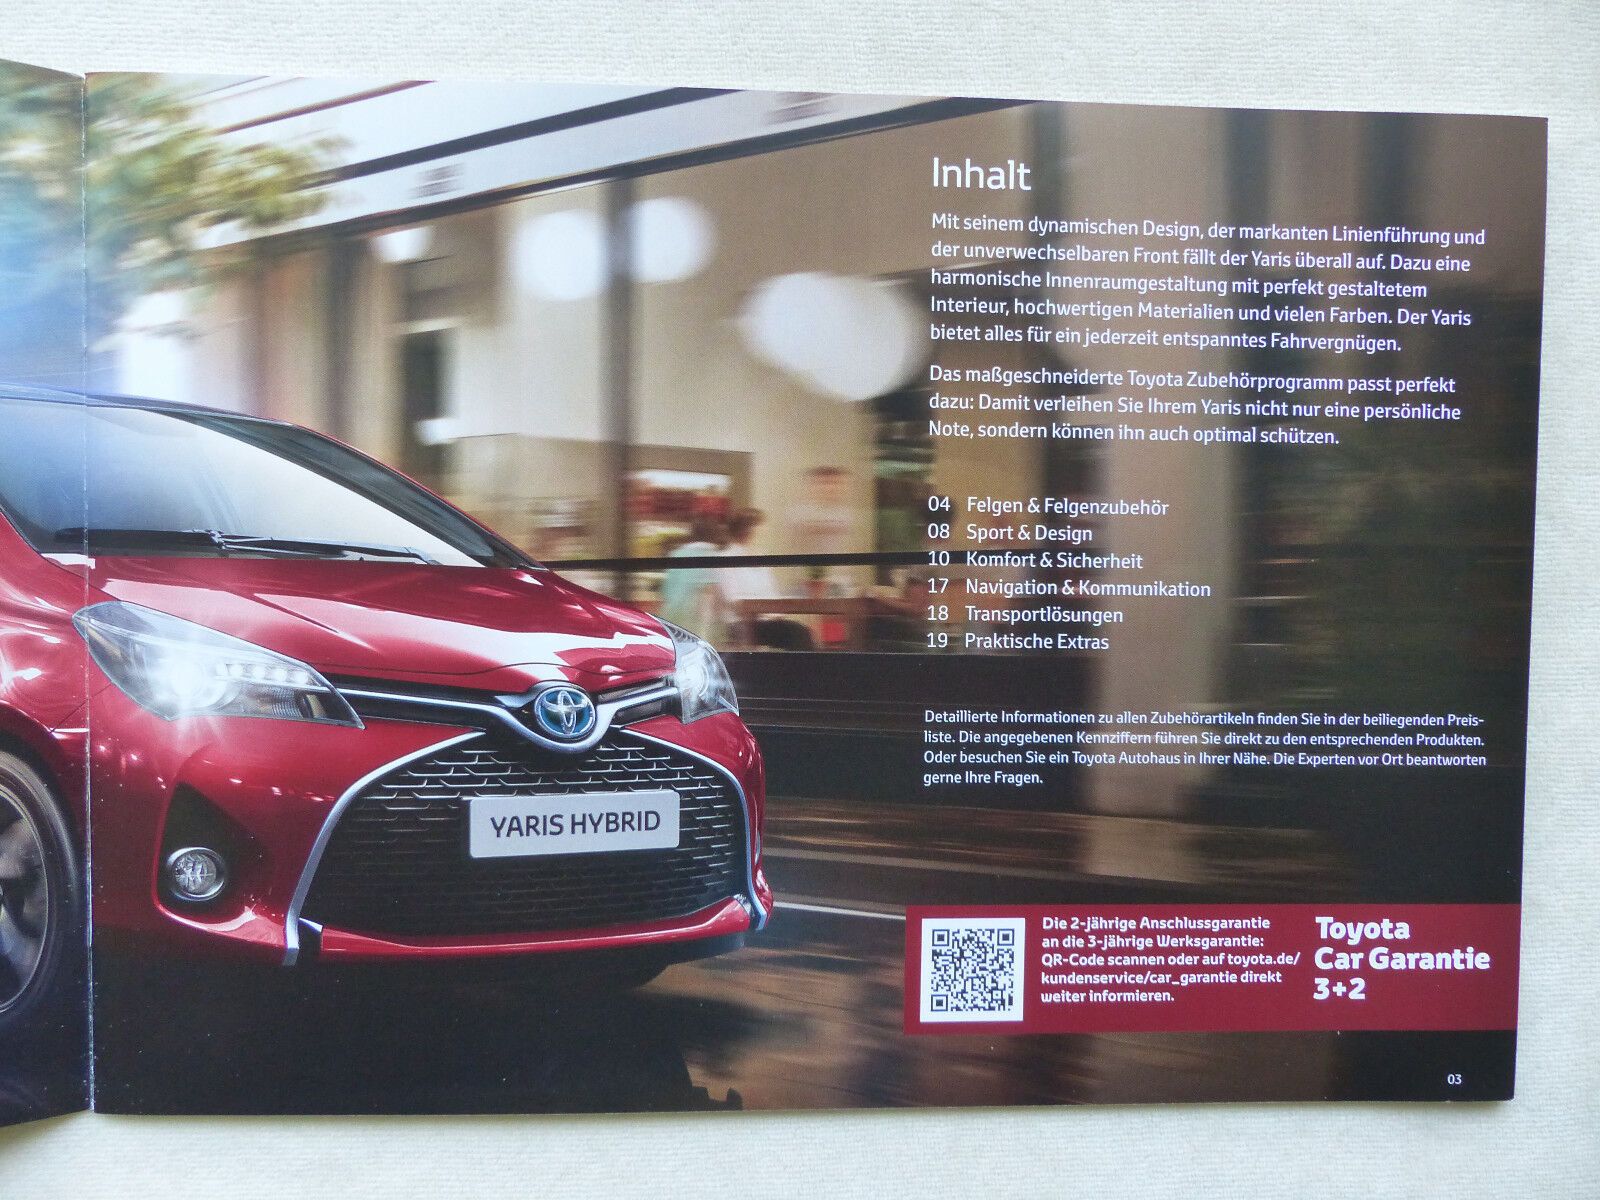 Toyota Yaris Zubehör - Prospekt Brochure + Preisliste 04.2016